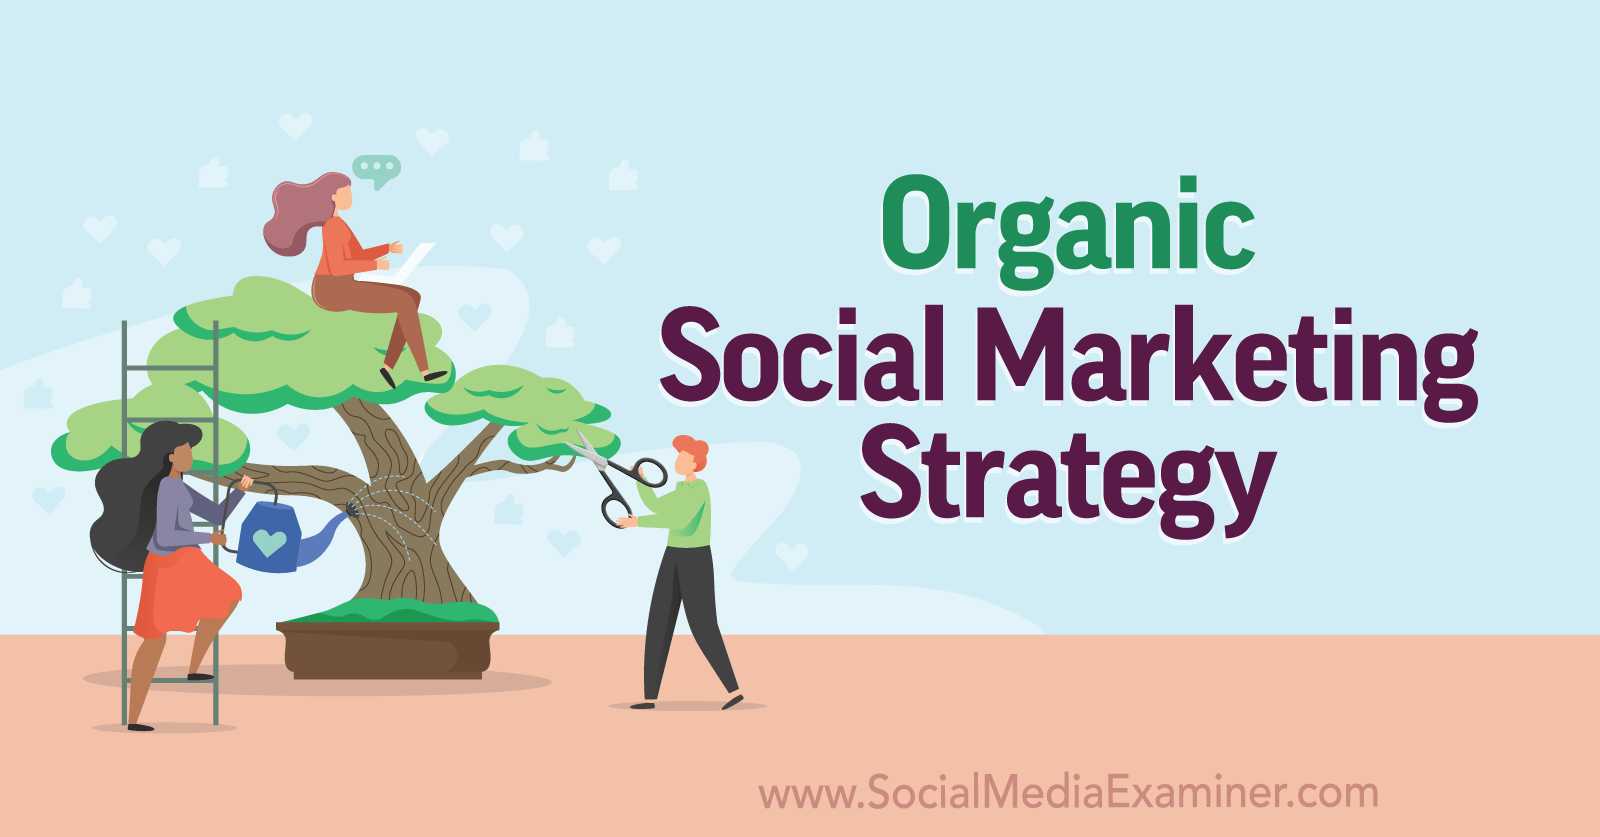 Organic Social Marketing Strategy by Social Media Examiner